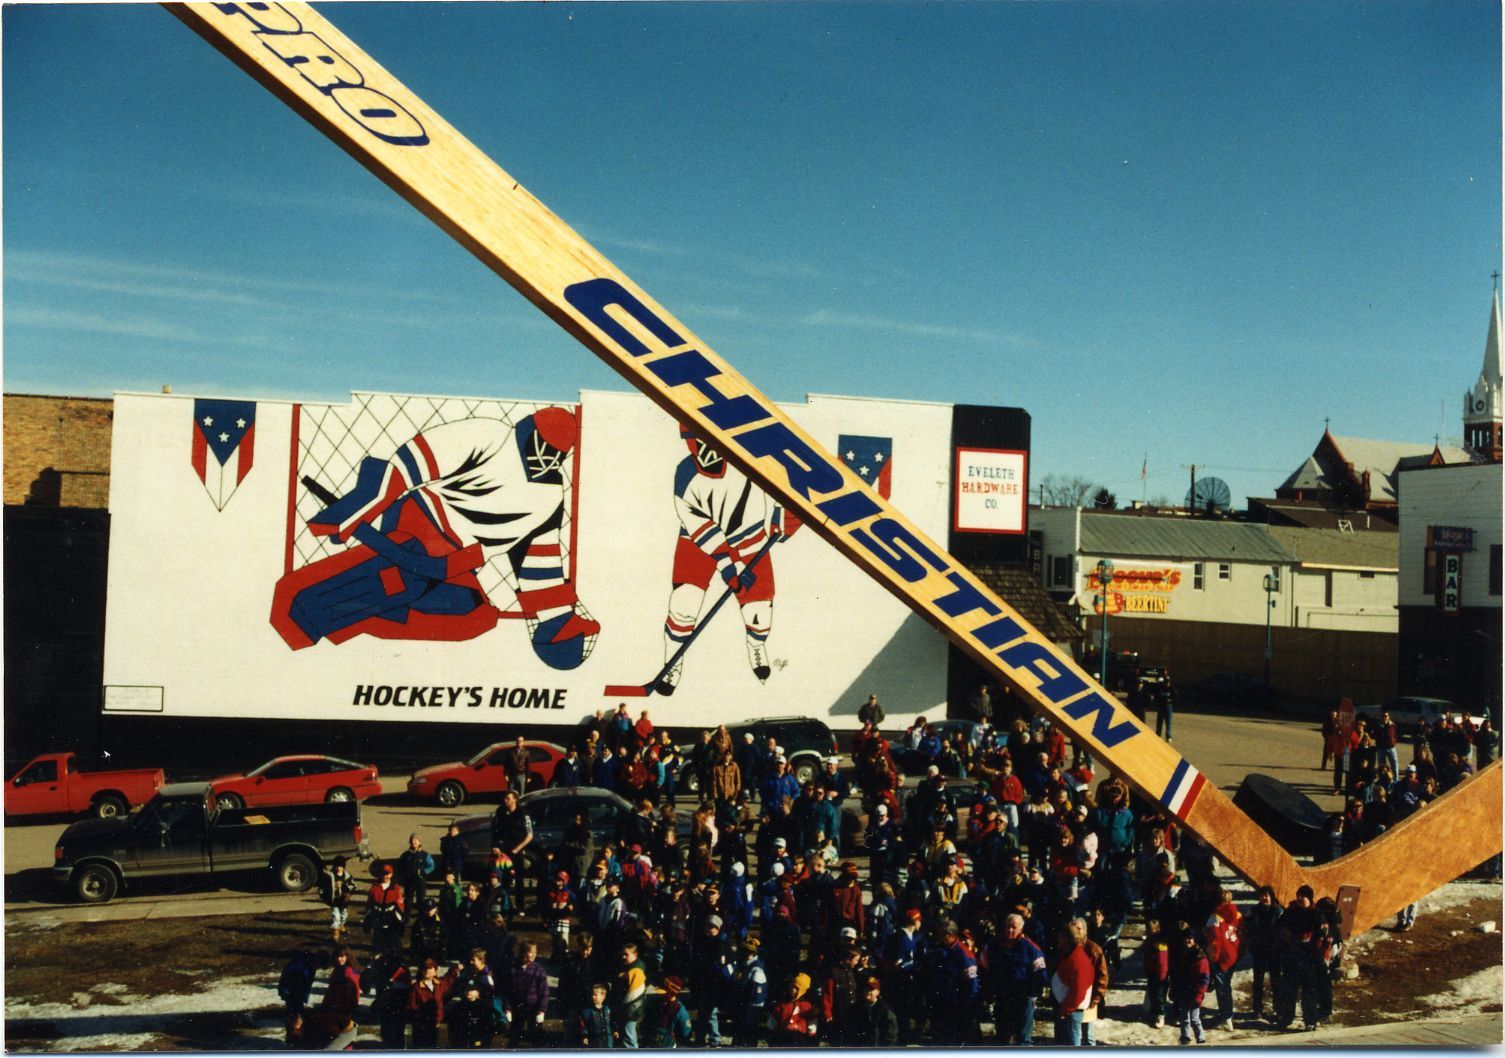 World's Largest Free-Standing Hockey Stick, world record in Eveleth, Minnesota
